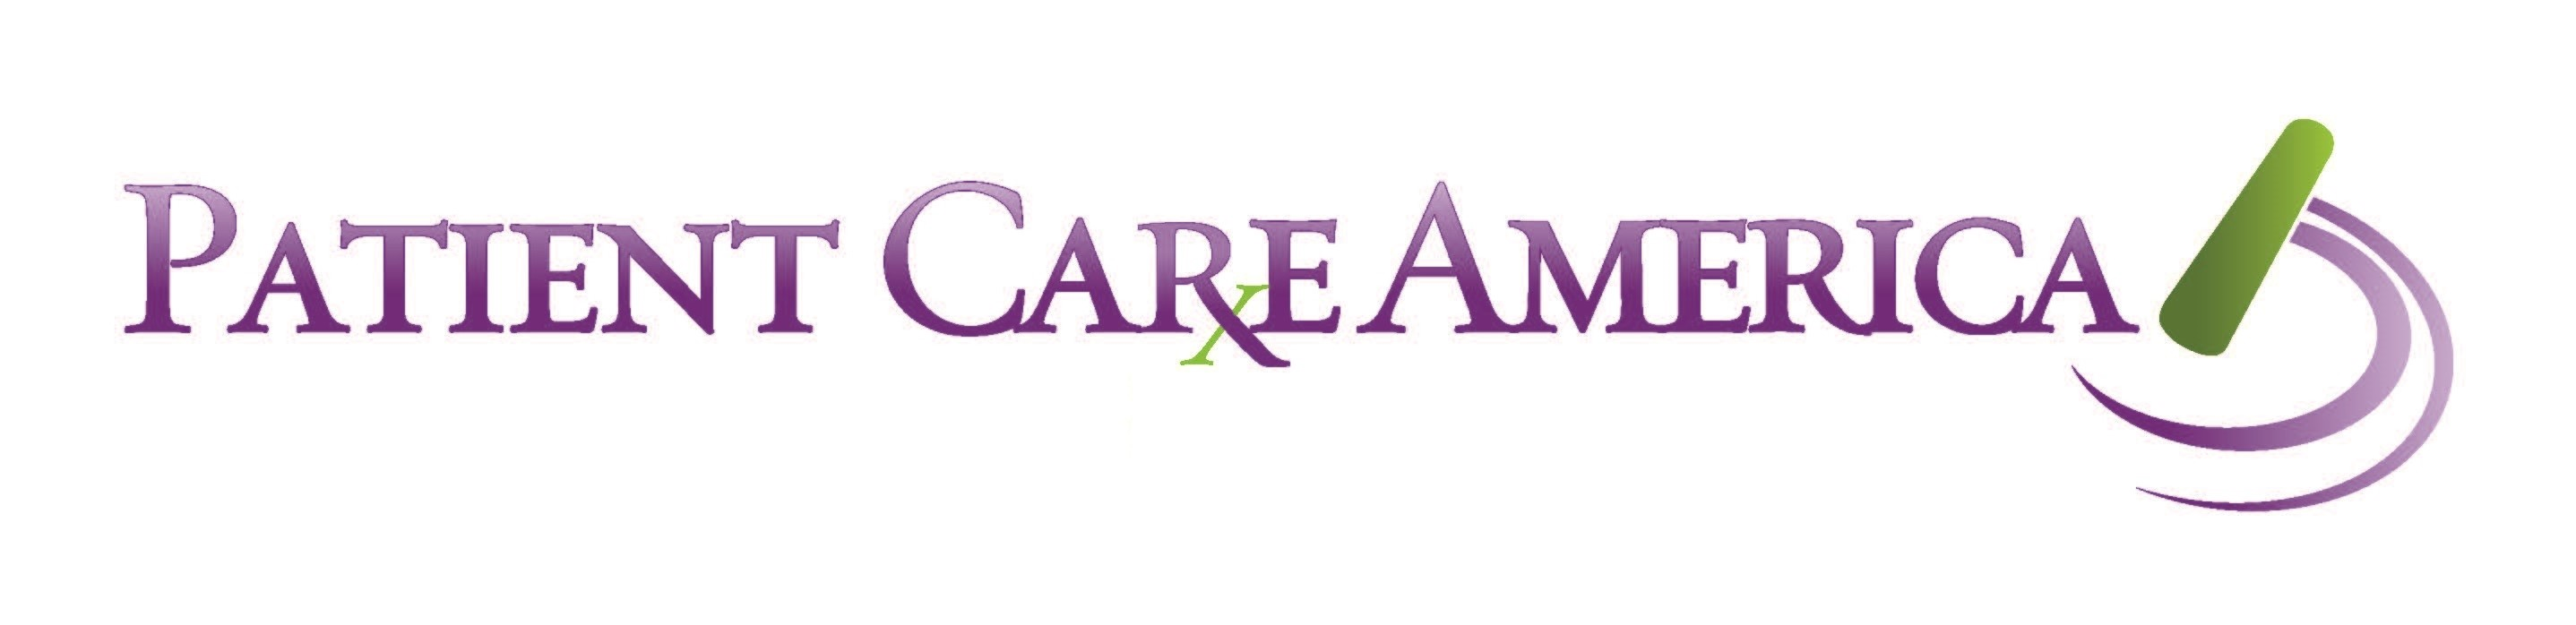 Patient Care America logo